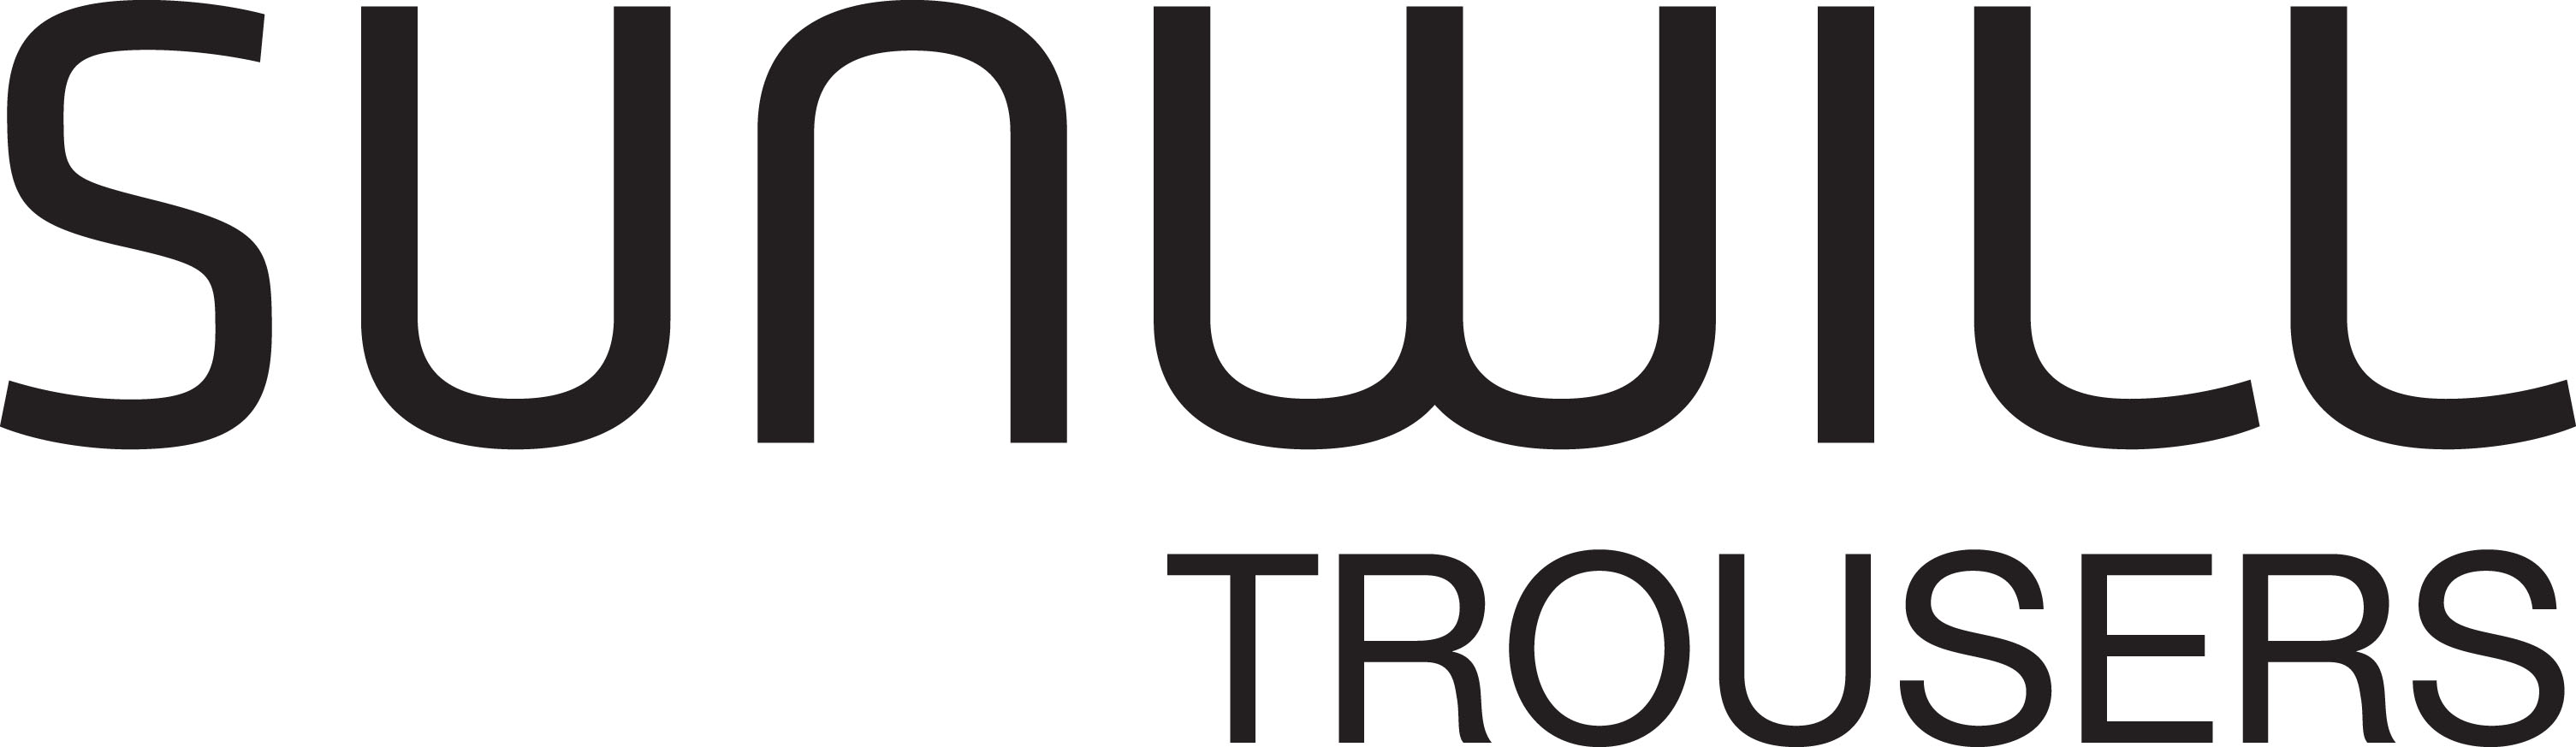 Sunwill_logo.jpg